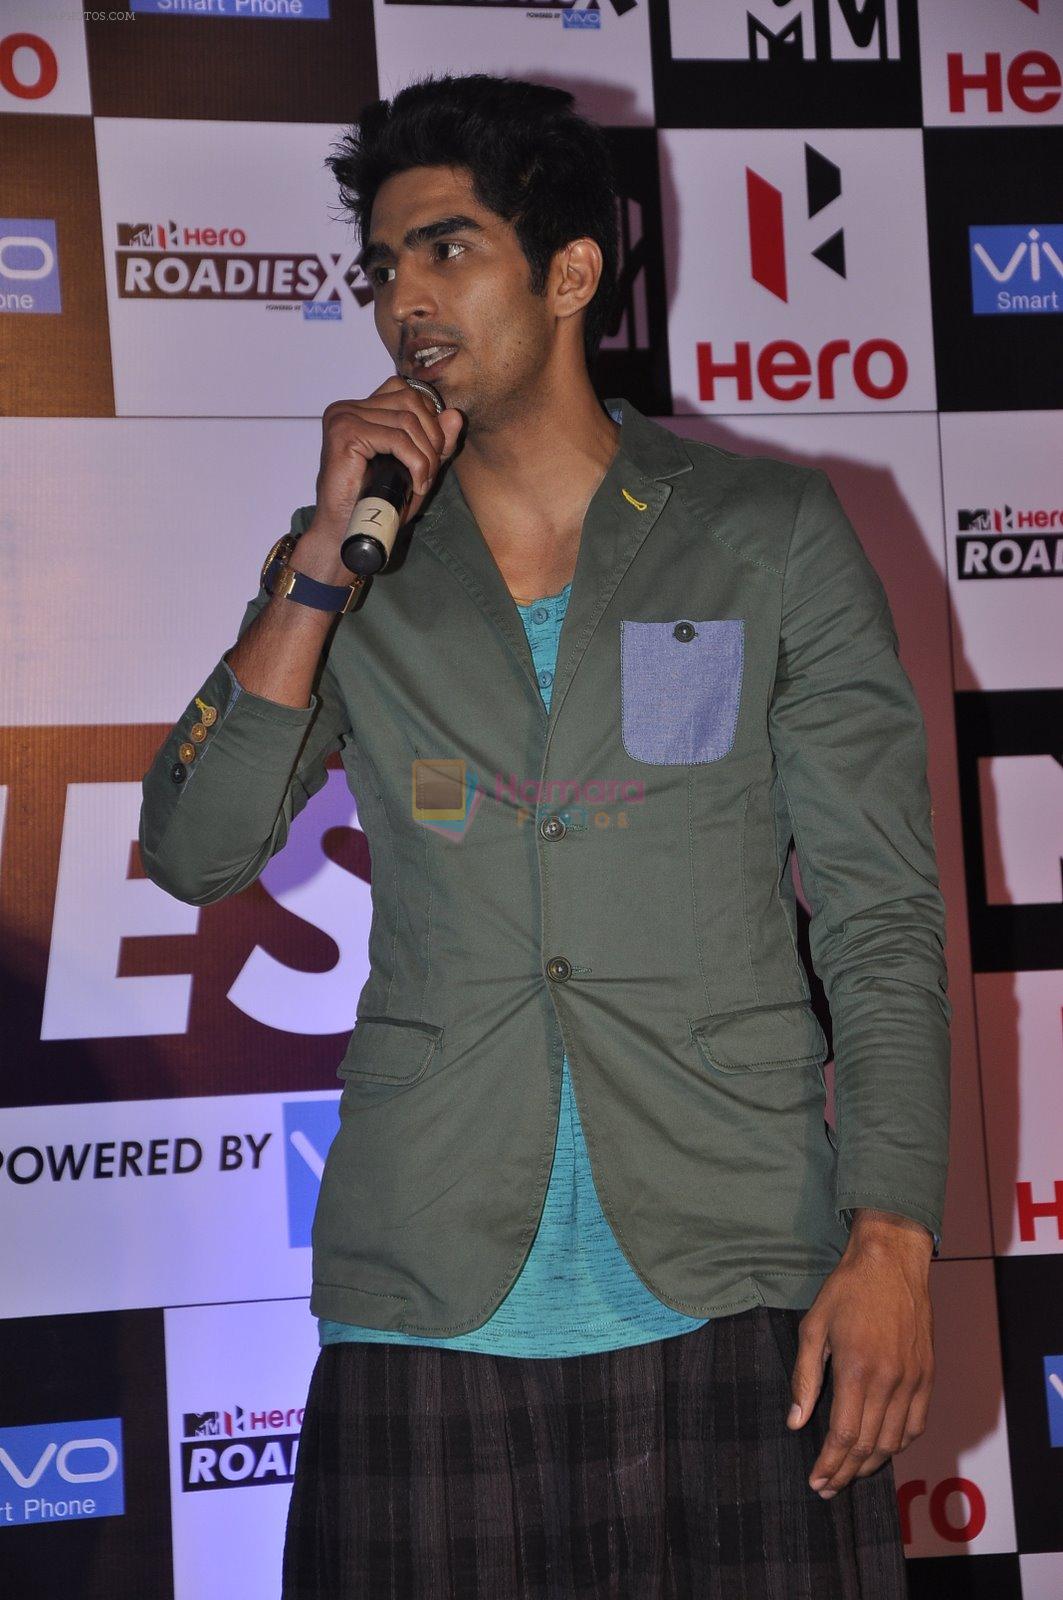 Vijender Singh at MTV Roadies press meet in Parel, Mumbai on 22nd Jan 2015